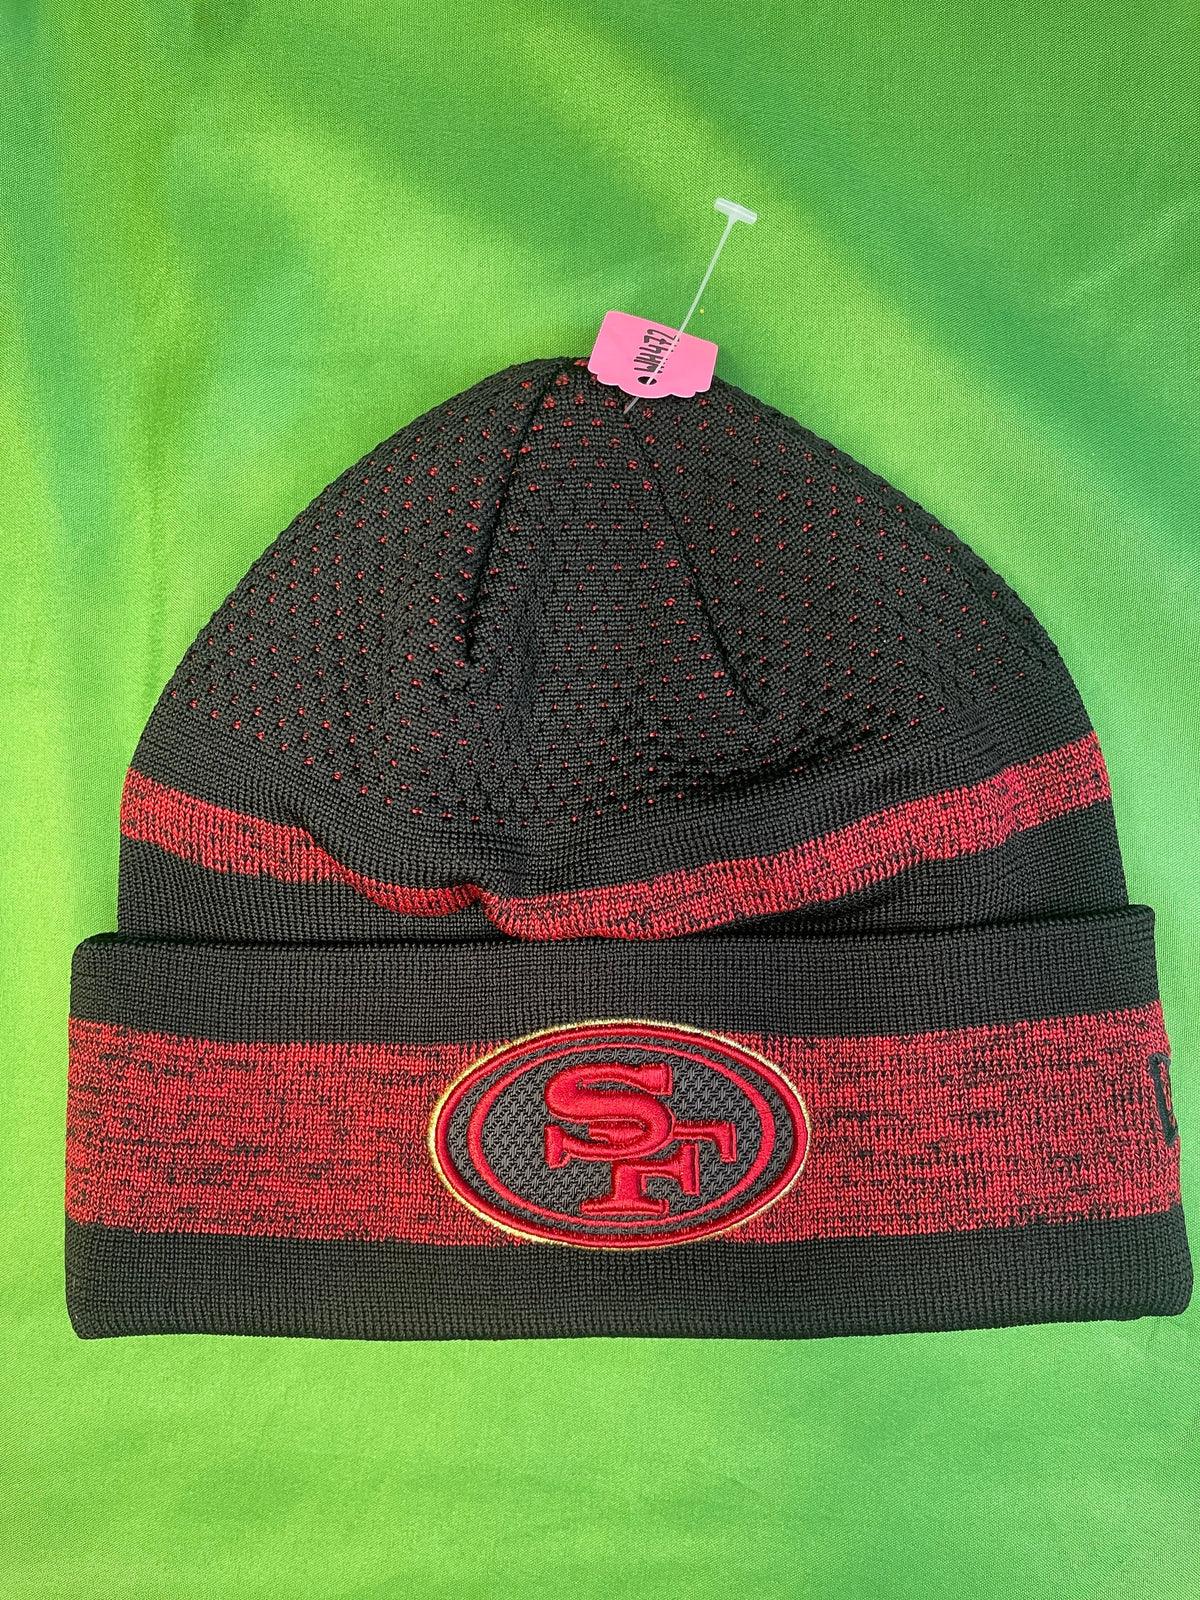 NFL San Francisco 49ers New Era Black & Red Woolly Hat Beanie OSFM